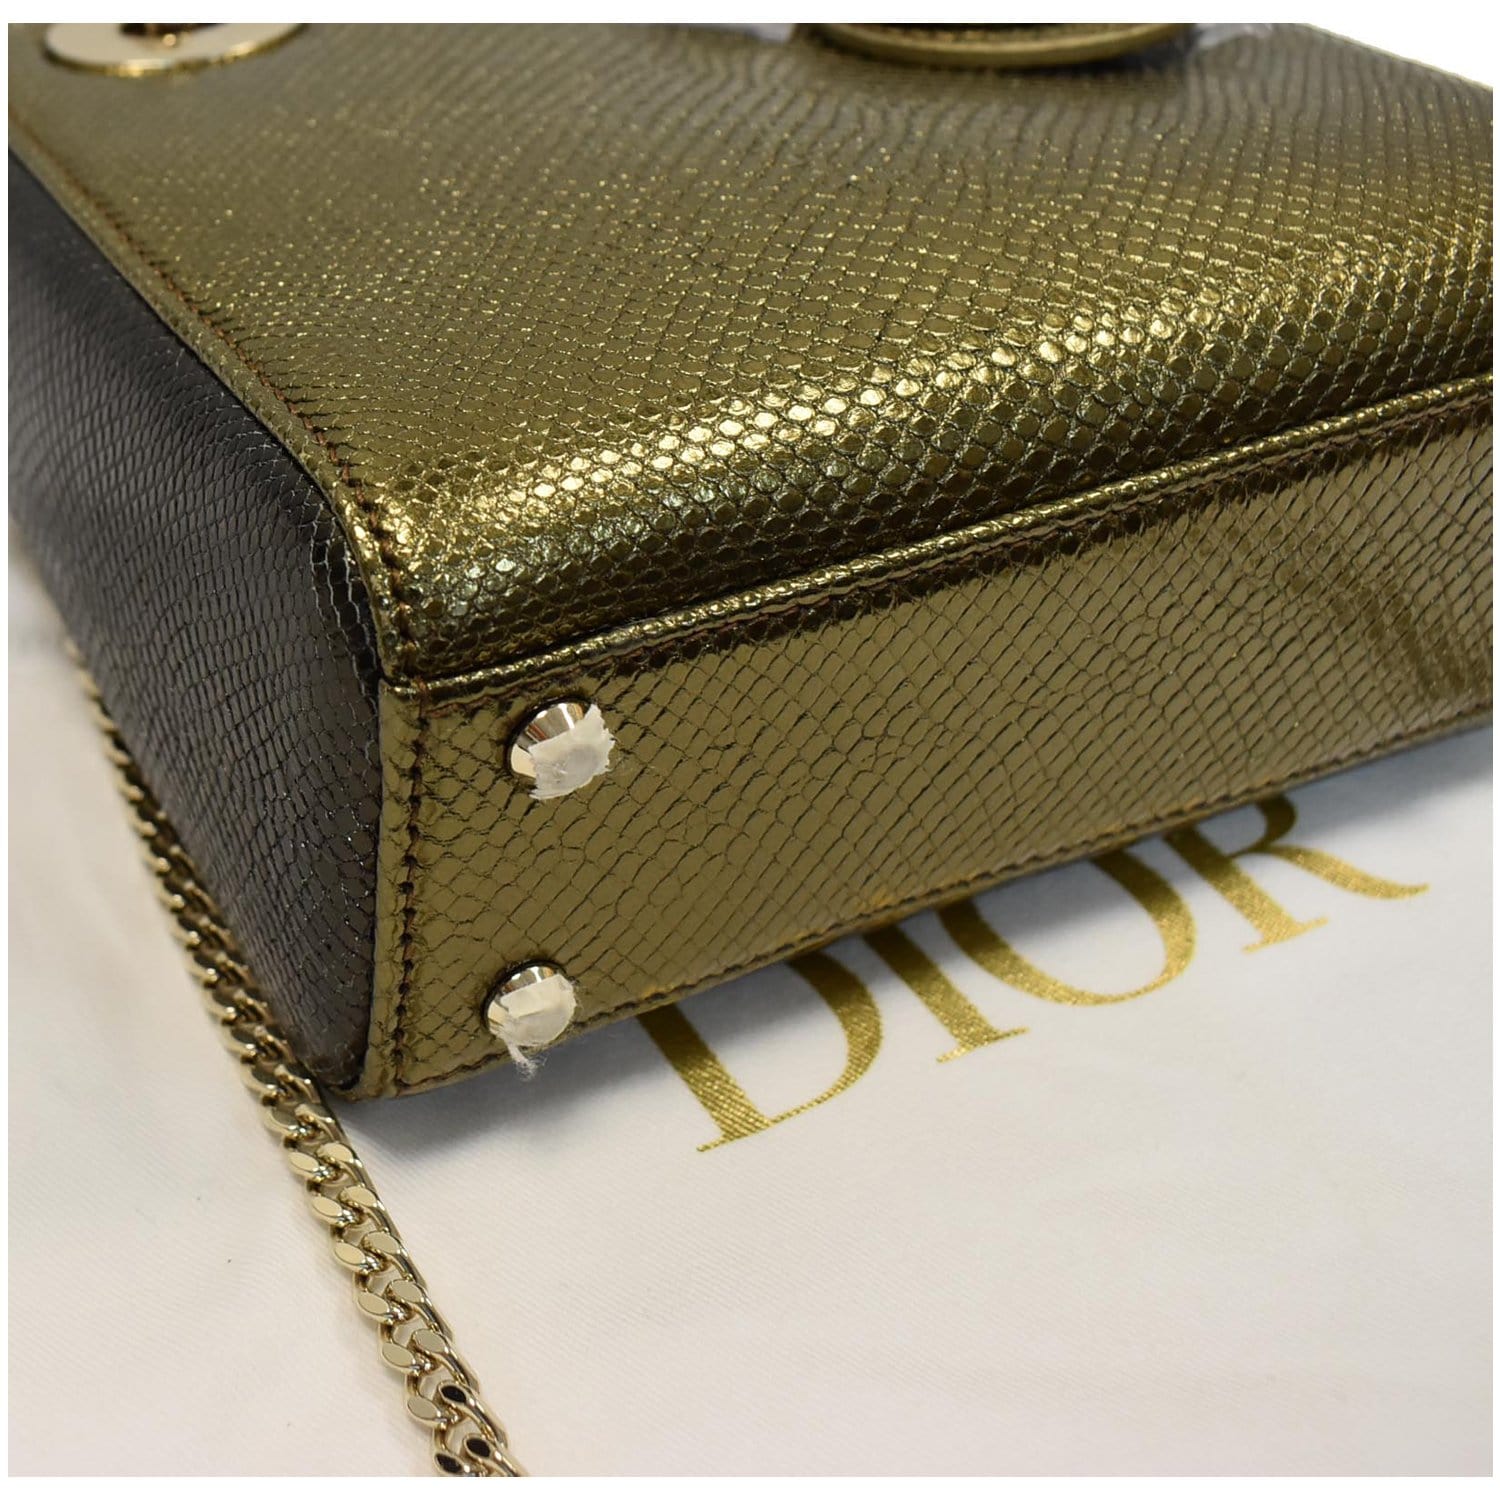 CHRISTIAN DIOR Mini Lady Dior Lizard Print Chain Shoulder Bag Metallic